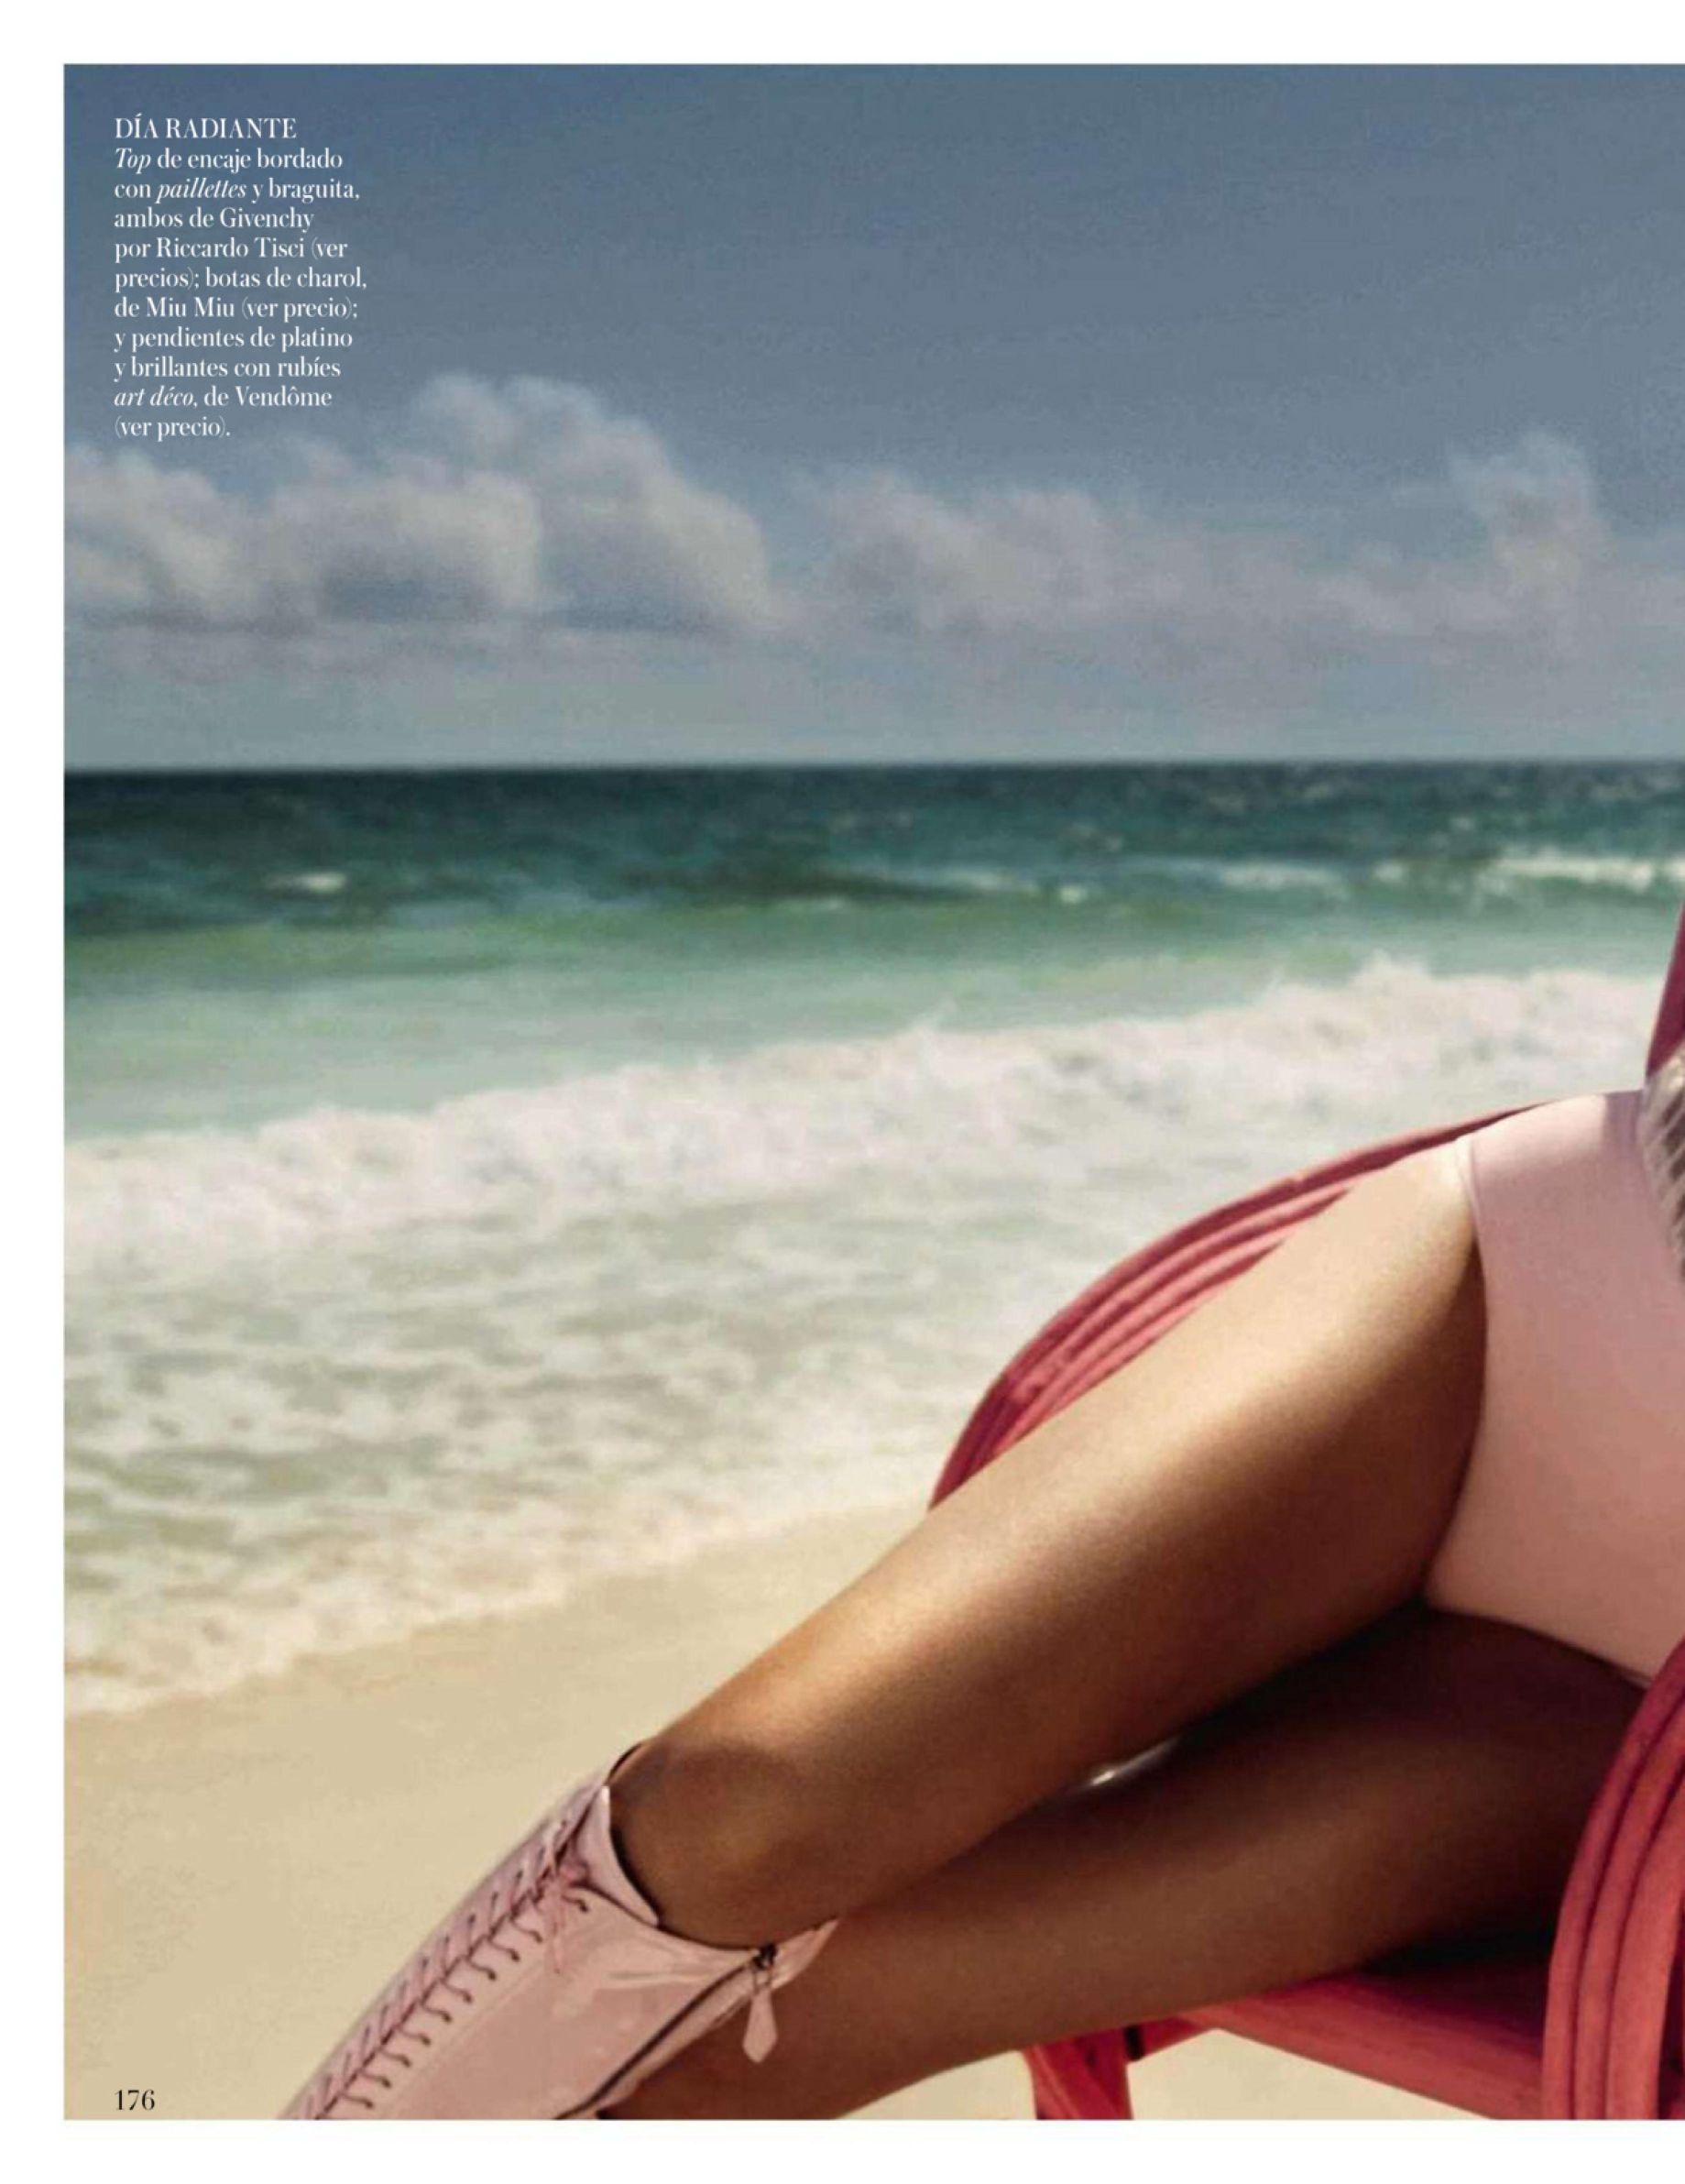 Adriana Lima - Vogue May 2014005.jpg